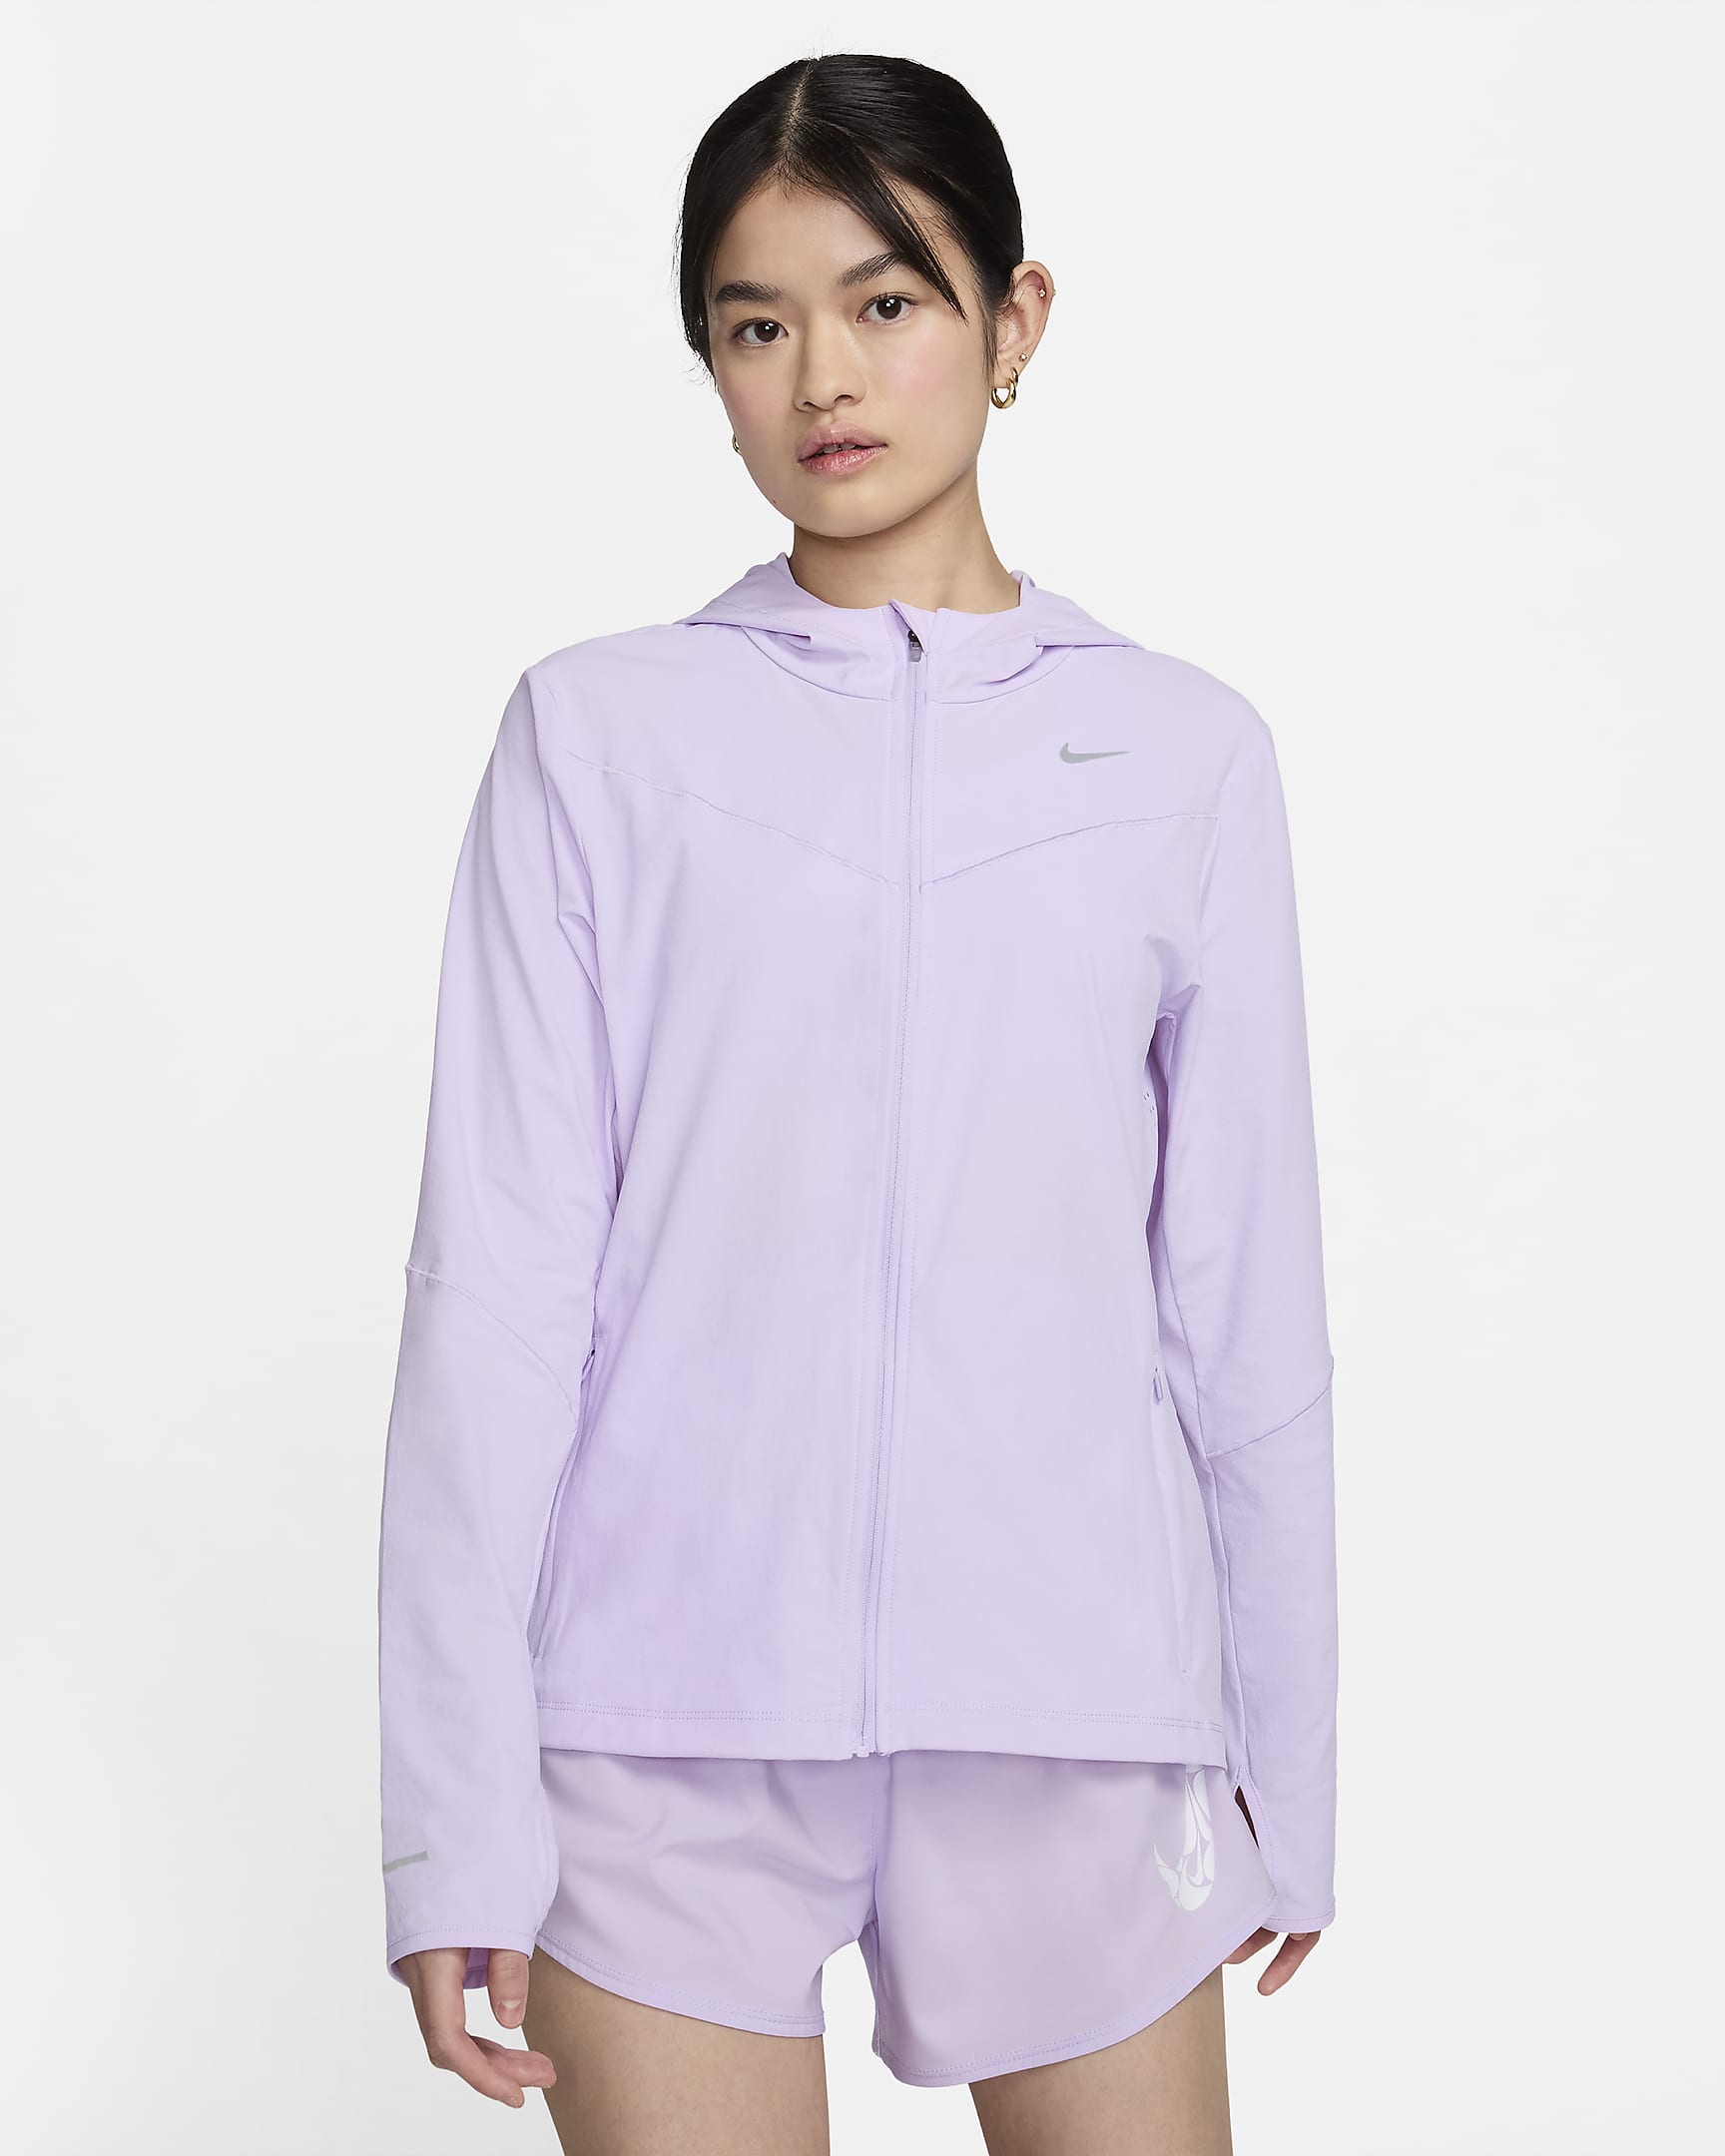 Nike Swift UV Women's Running Jacket. Nike SG